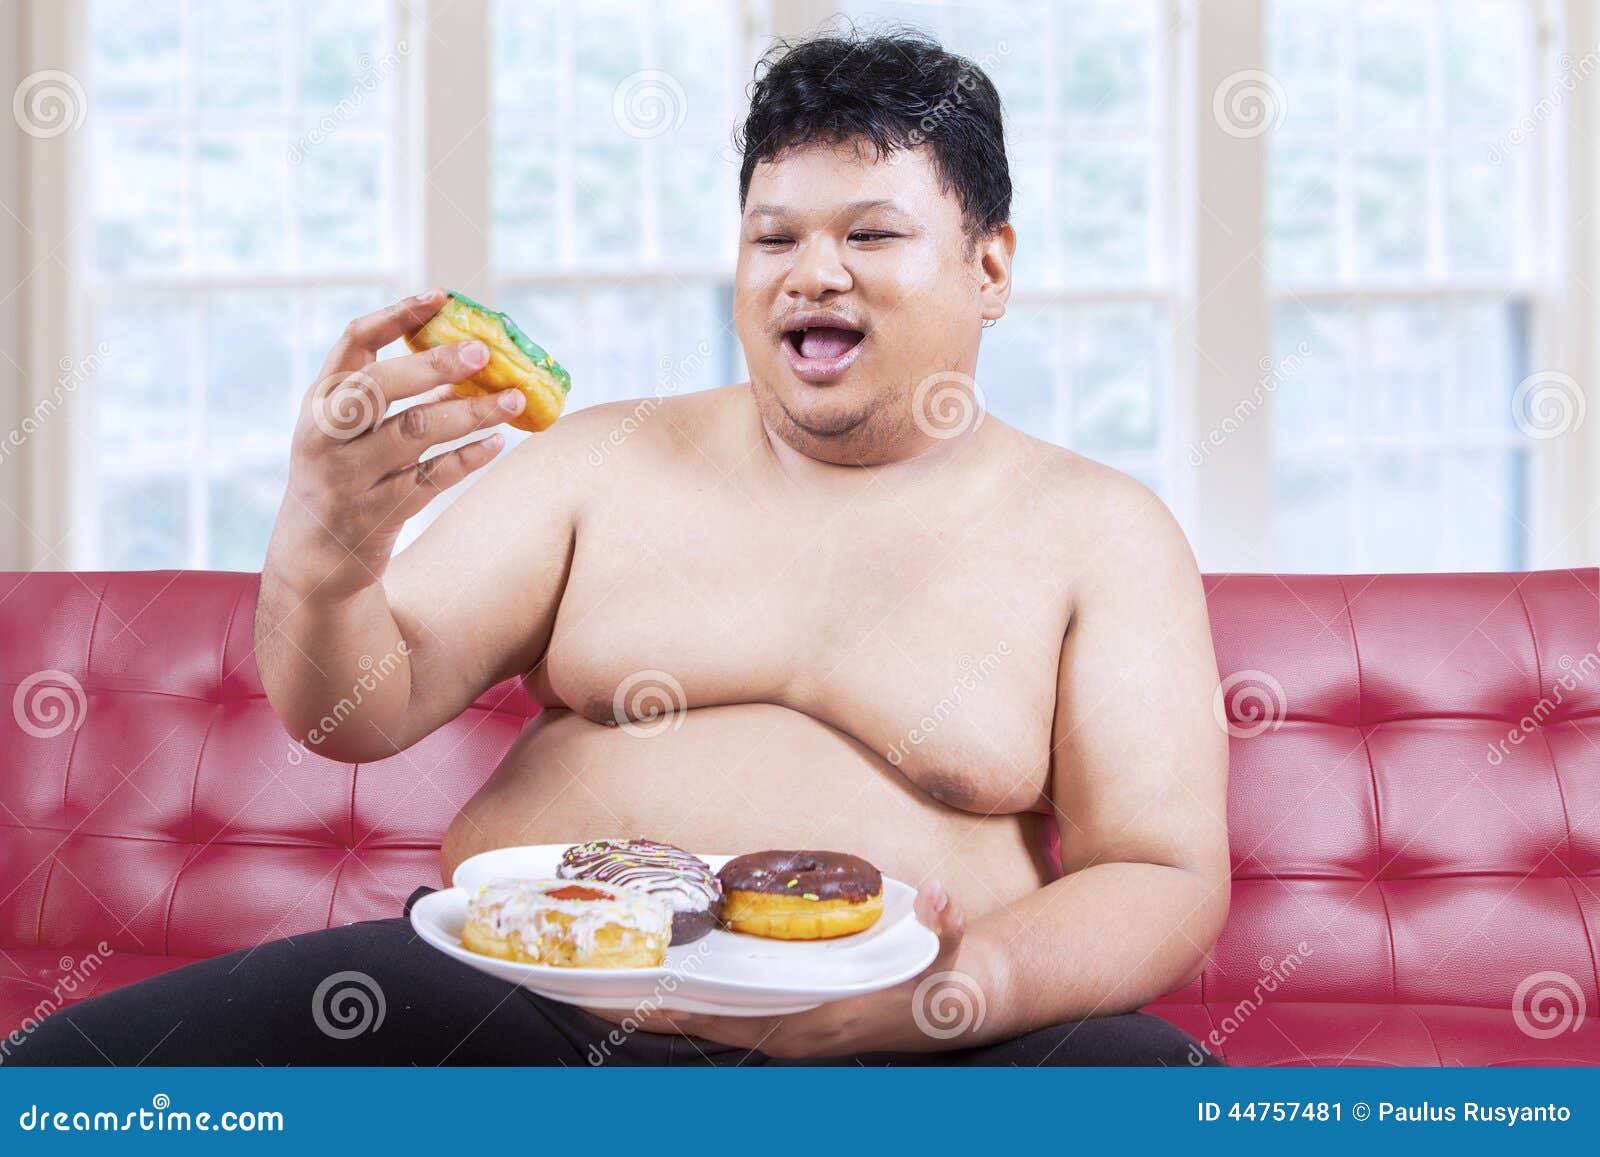 Cheerful Fat Man Eating Donuts 2 Stock Photo Image 44757481